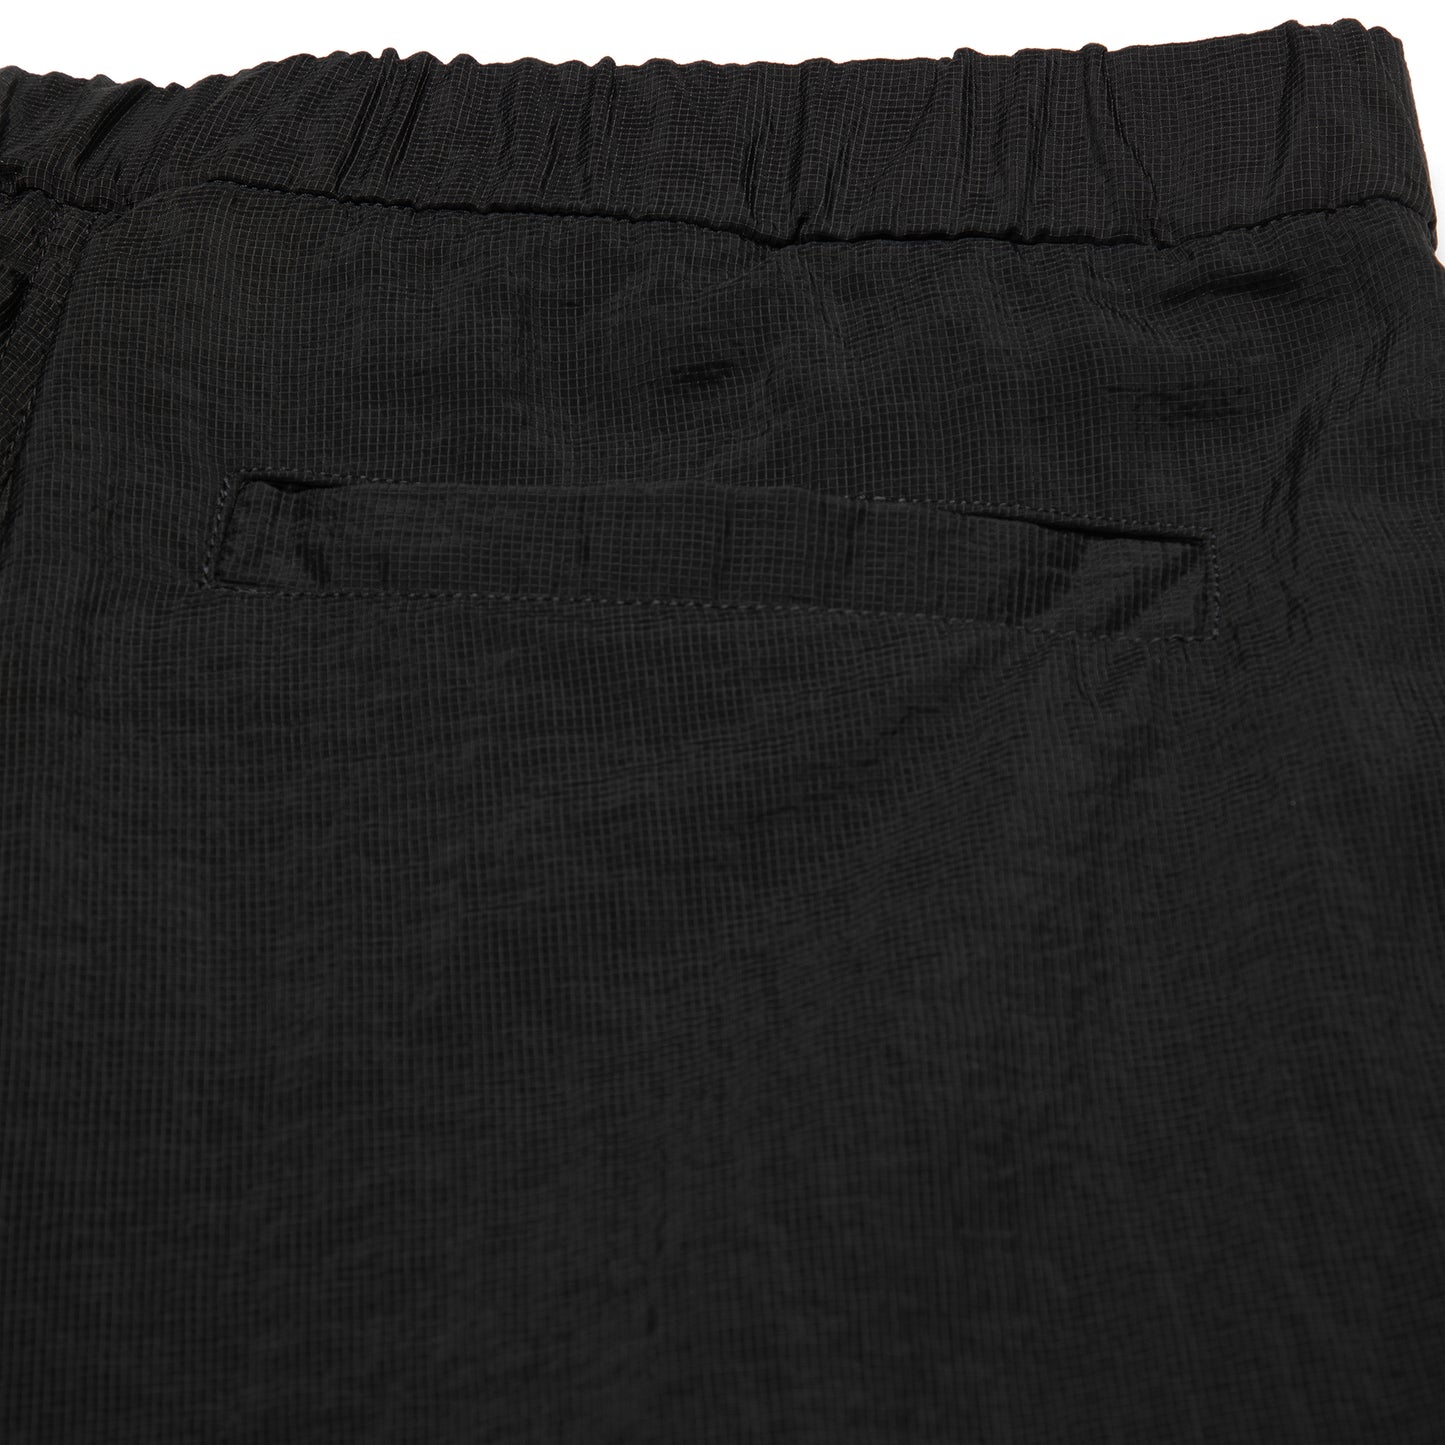 1017 ALYX 9SM Nylon Cargo Pant (Black)